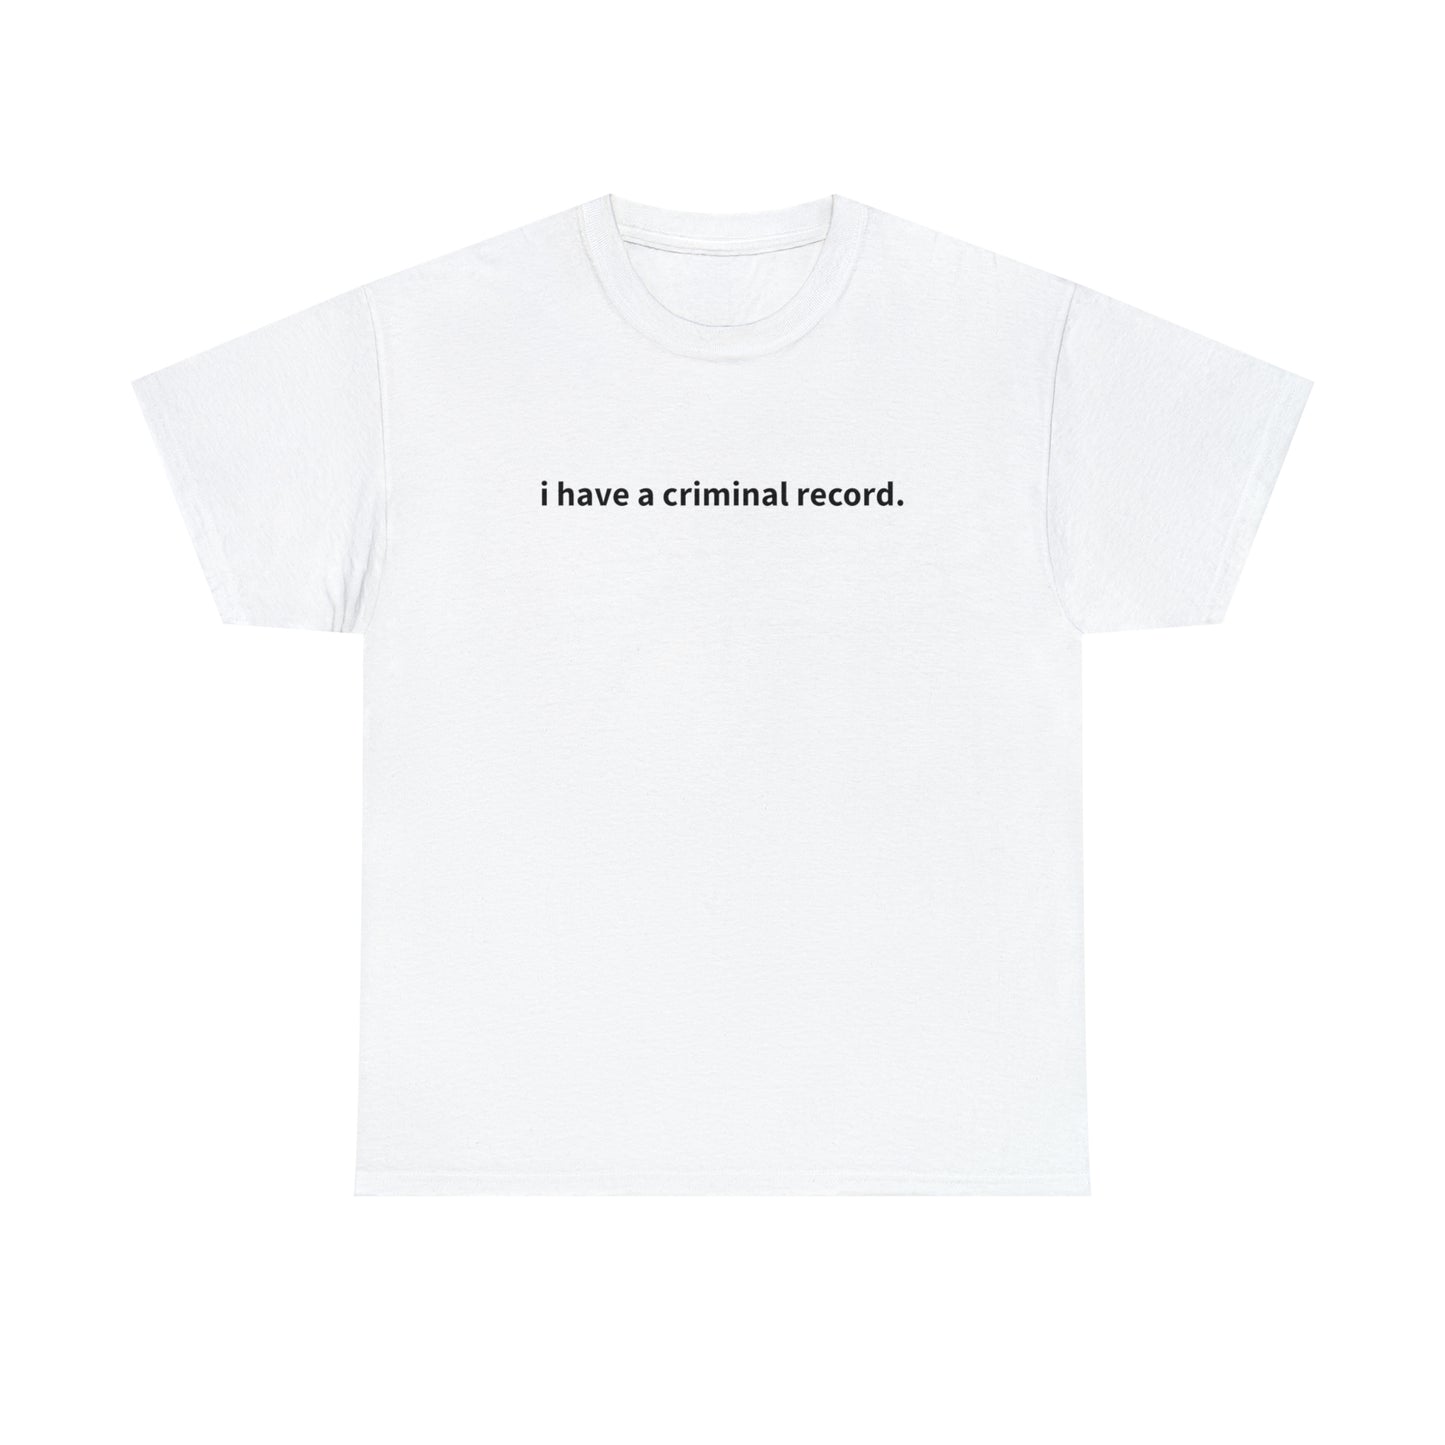 "i have a criminal record" T-Shirt!